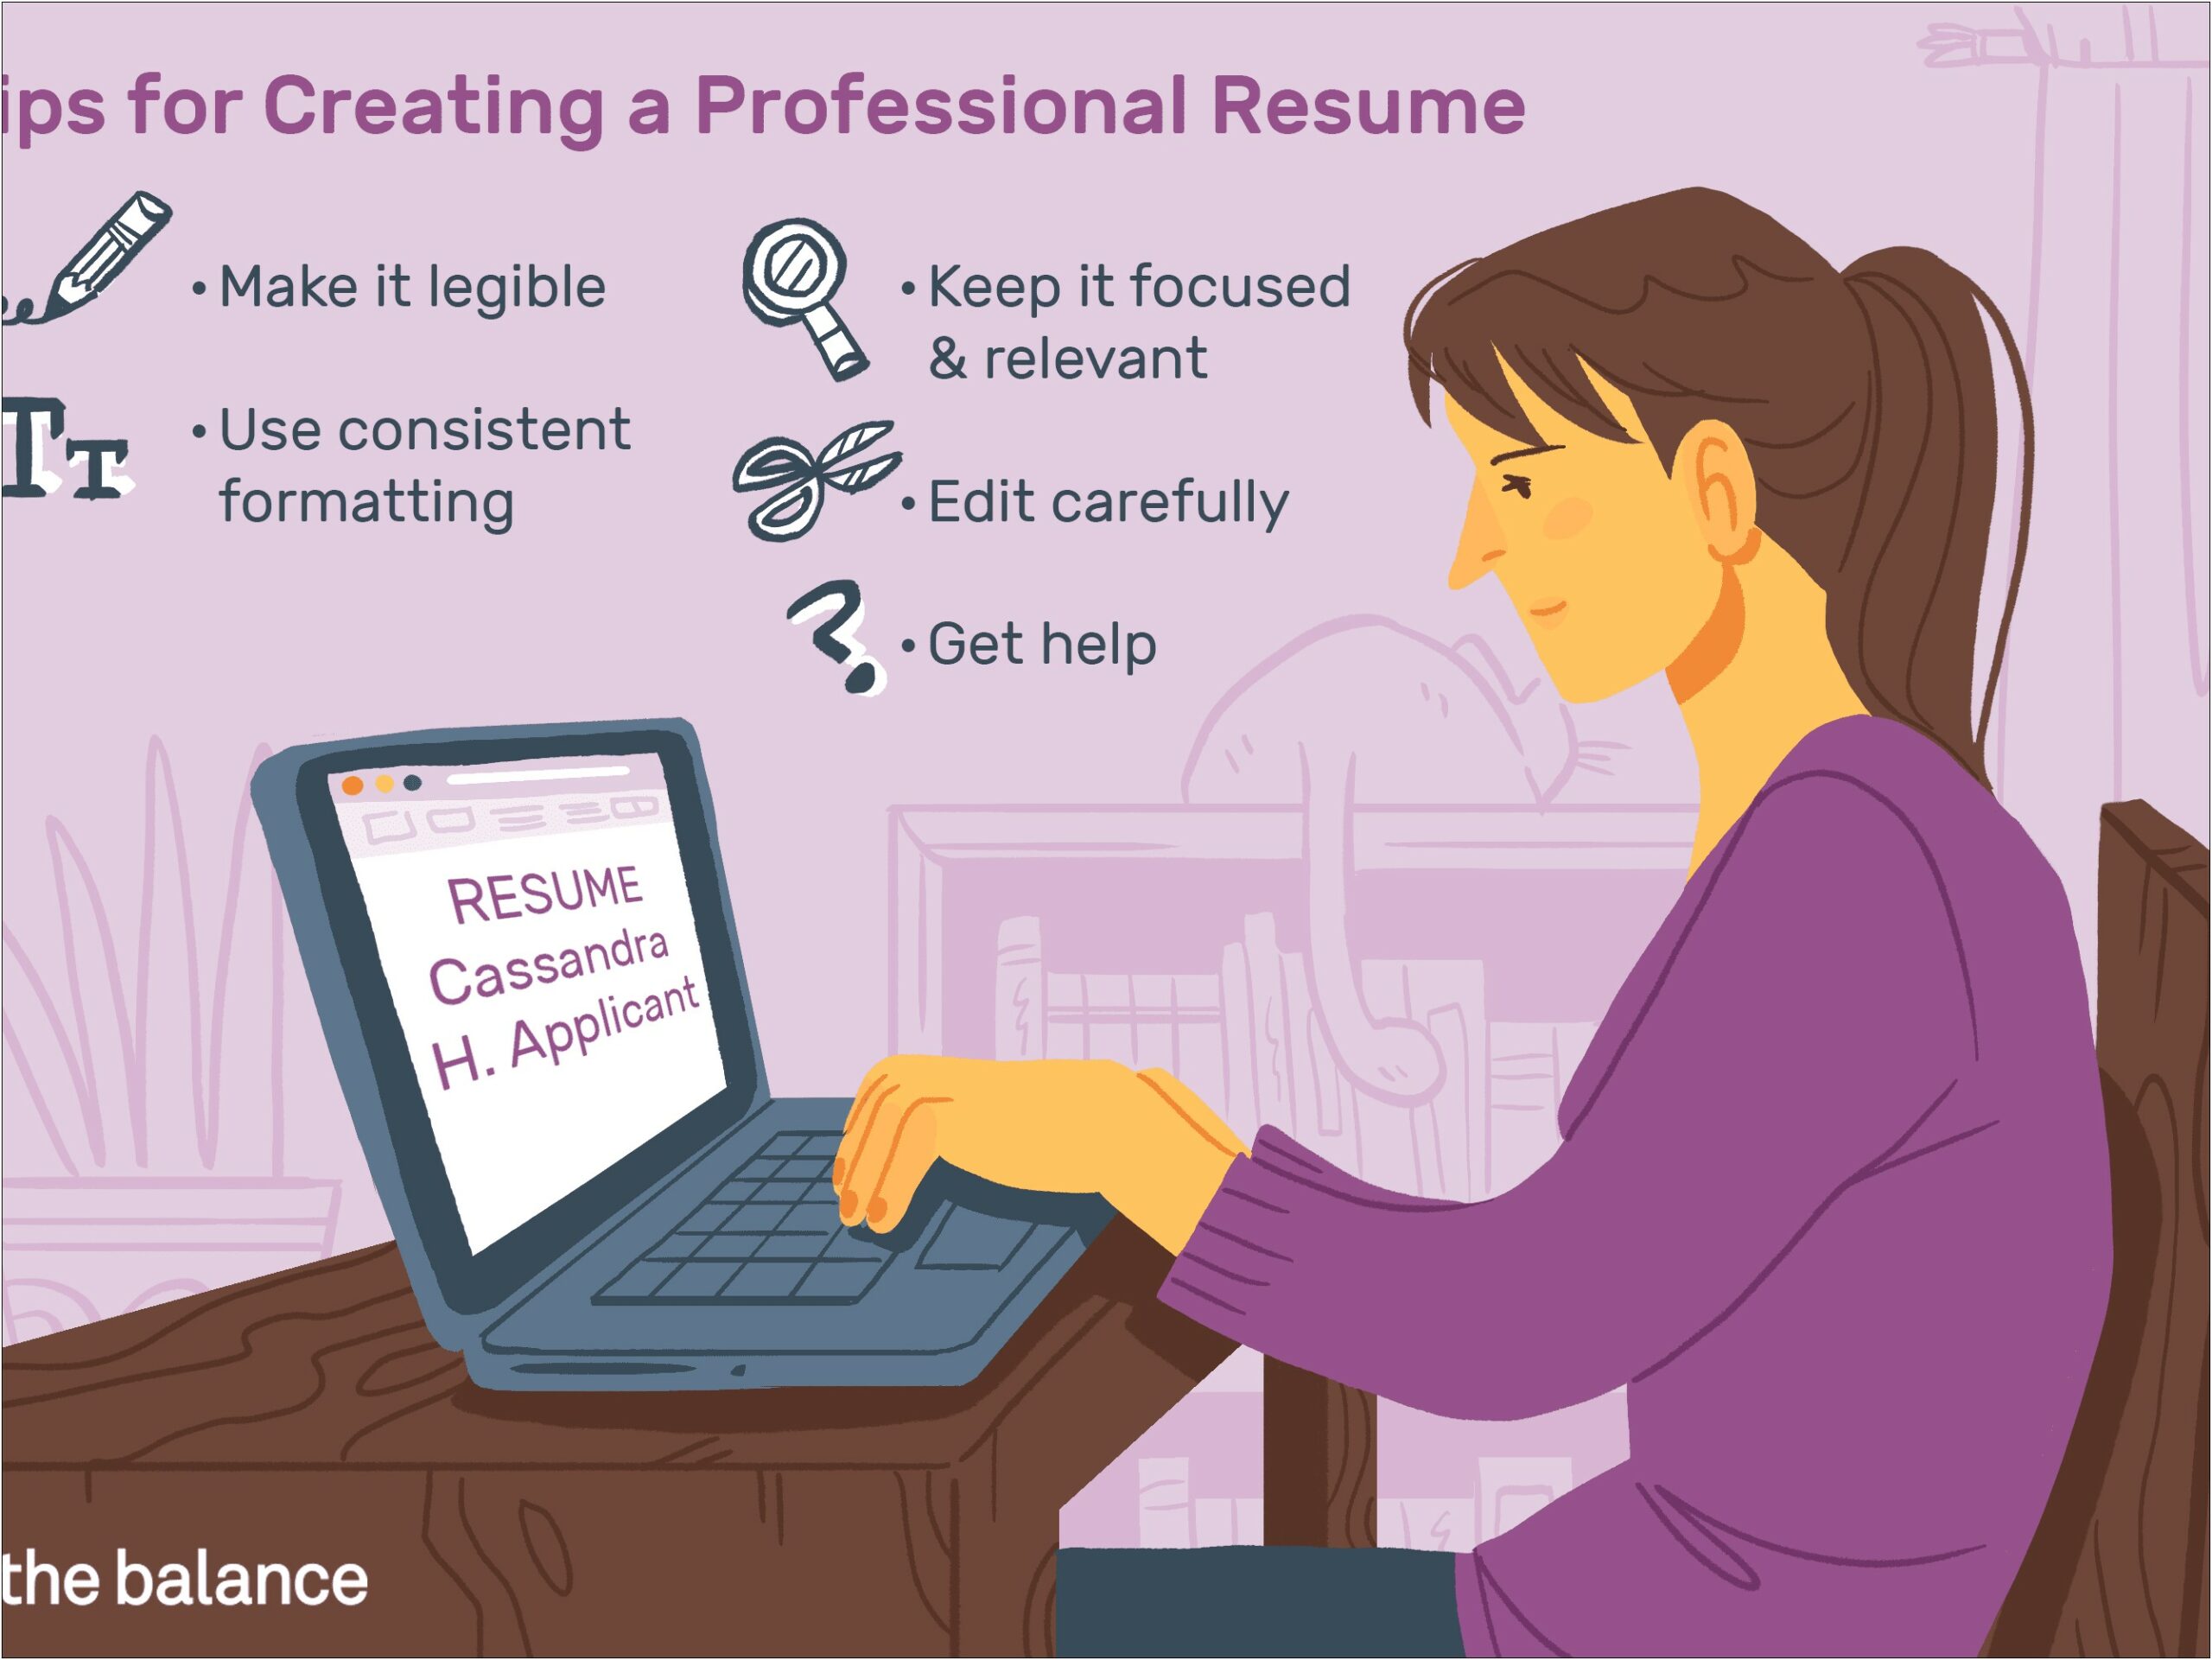 Tips To Make A Good Resume